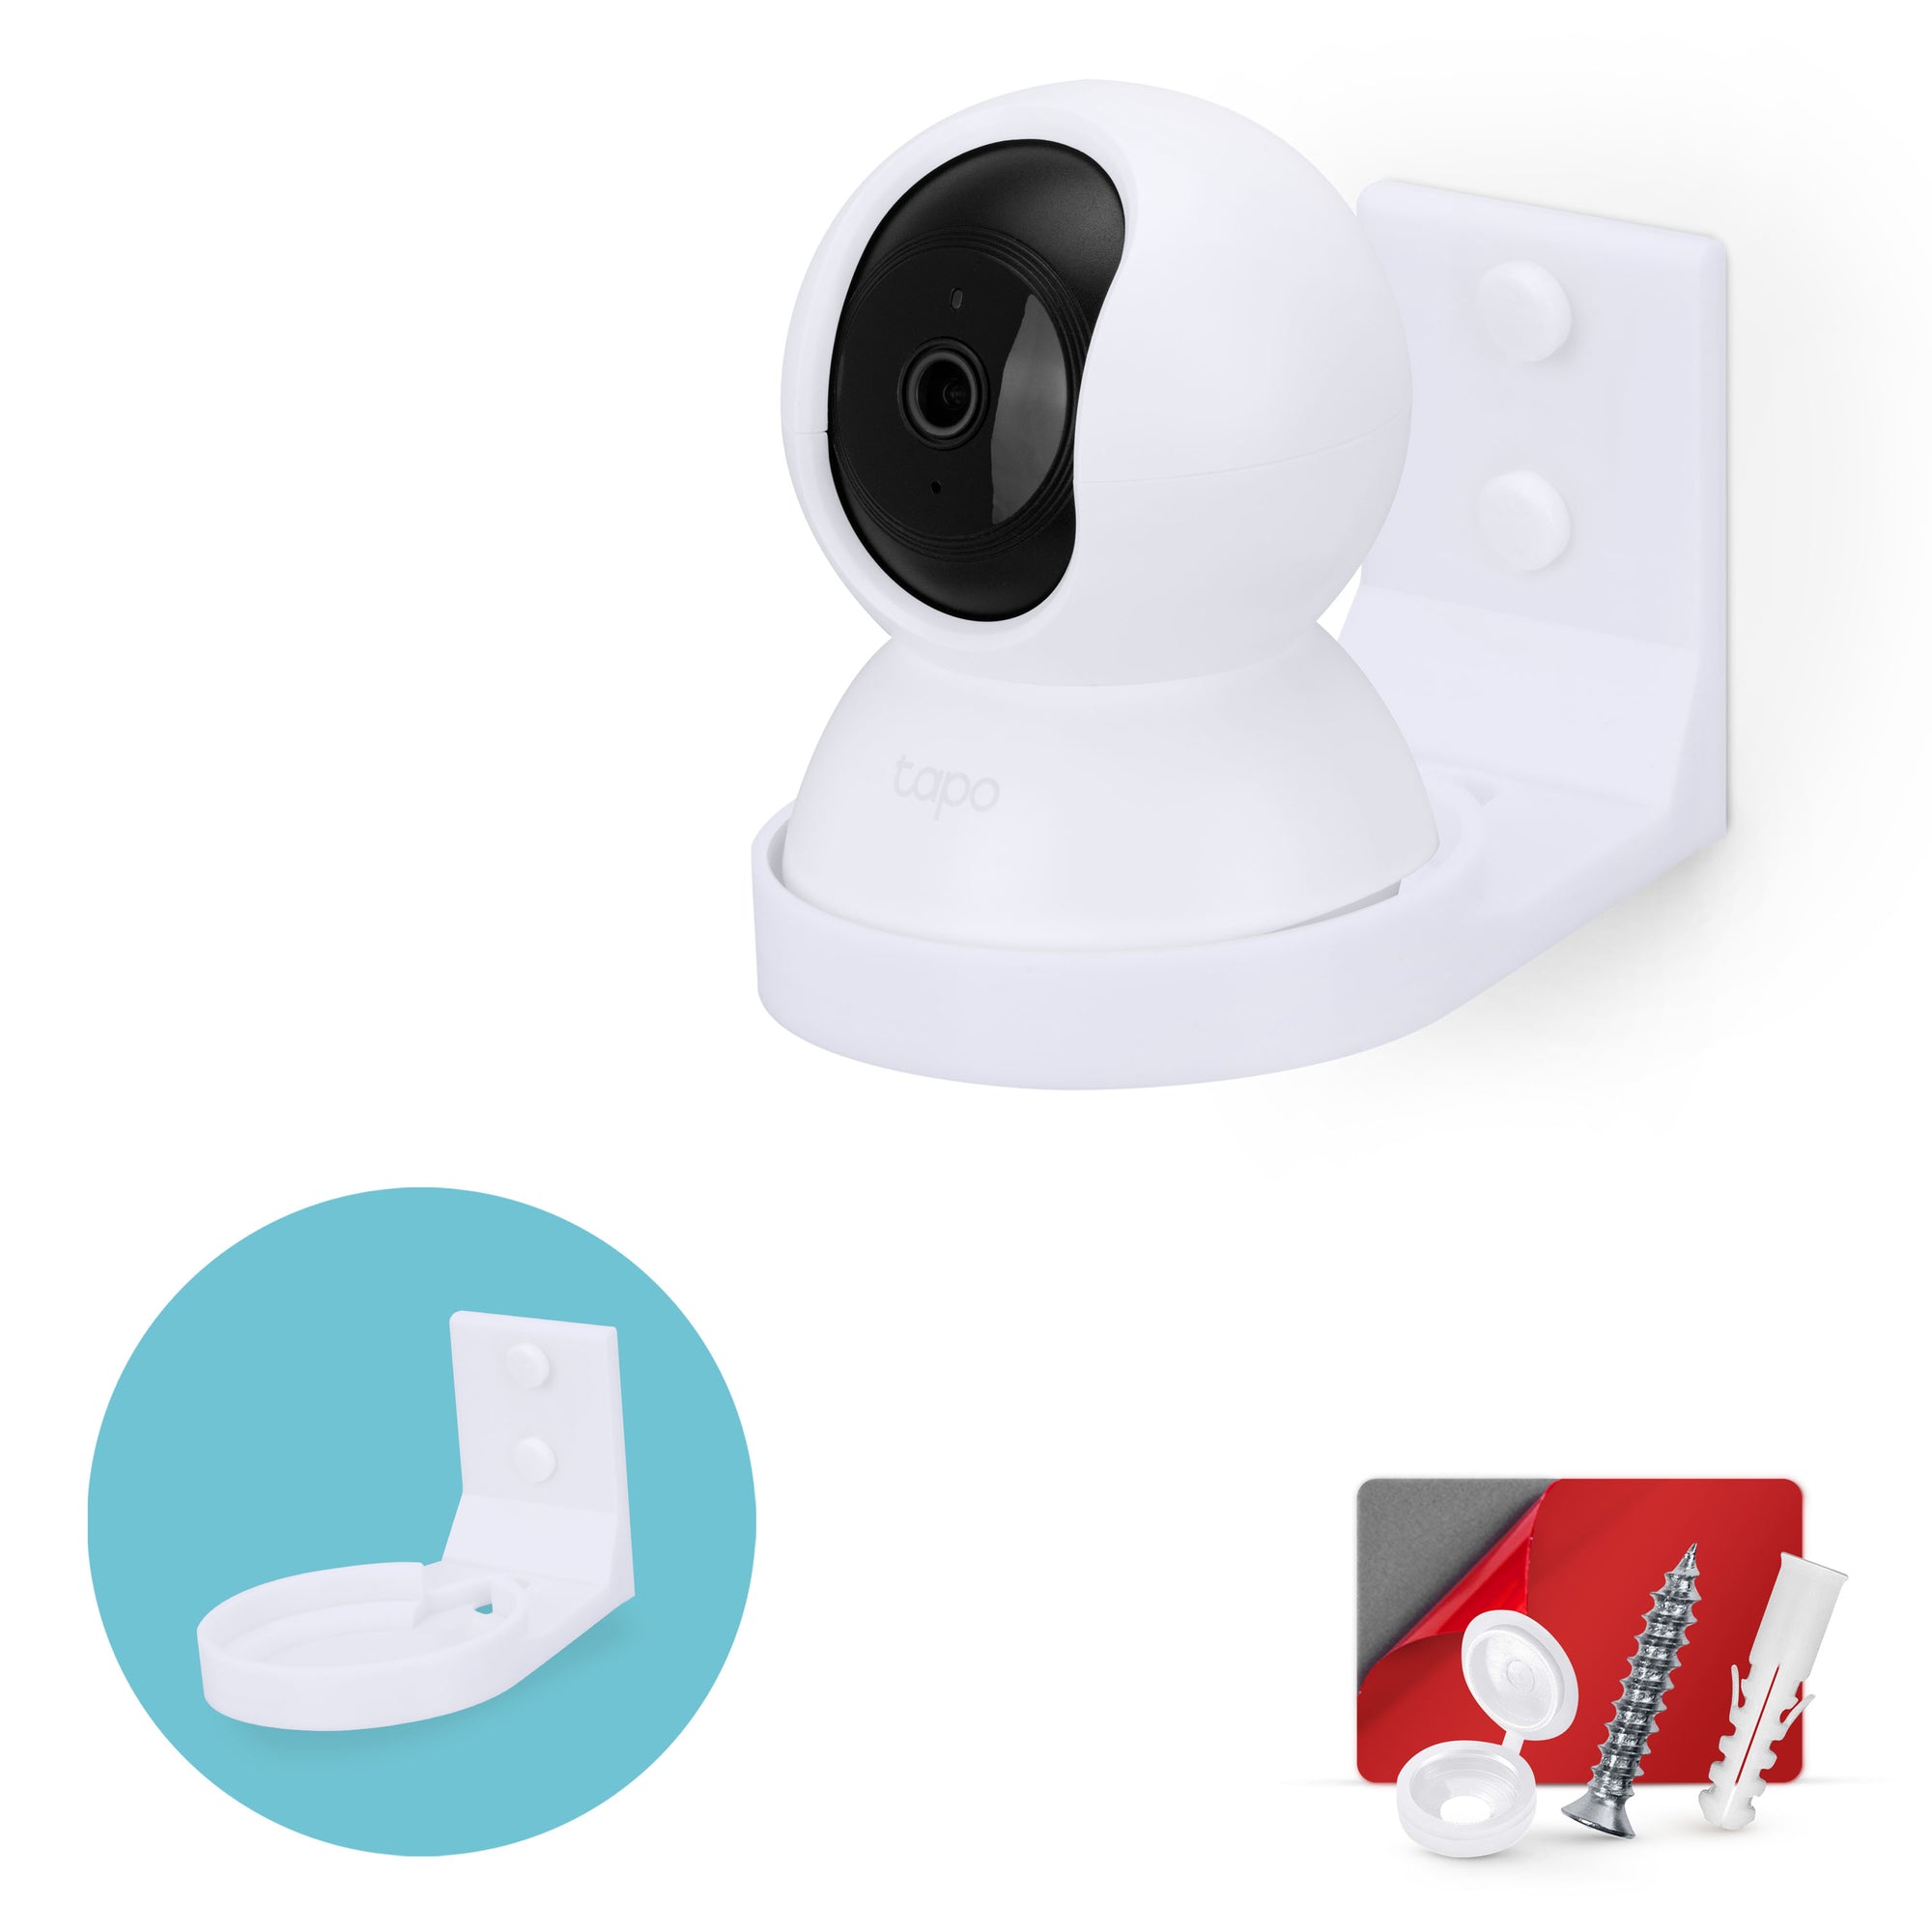 Wall Mount Holder For Tapo Pan/Tilt (C200 & C210) Smart Security Camera, Custom Designed Bracket, Reduce Blind Spots & Clutter